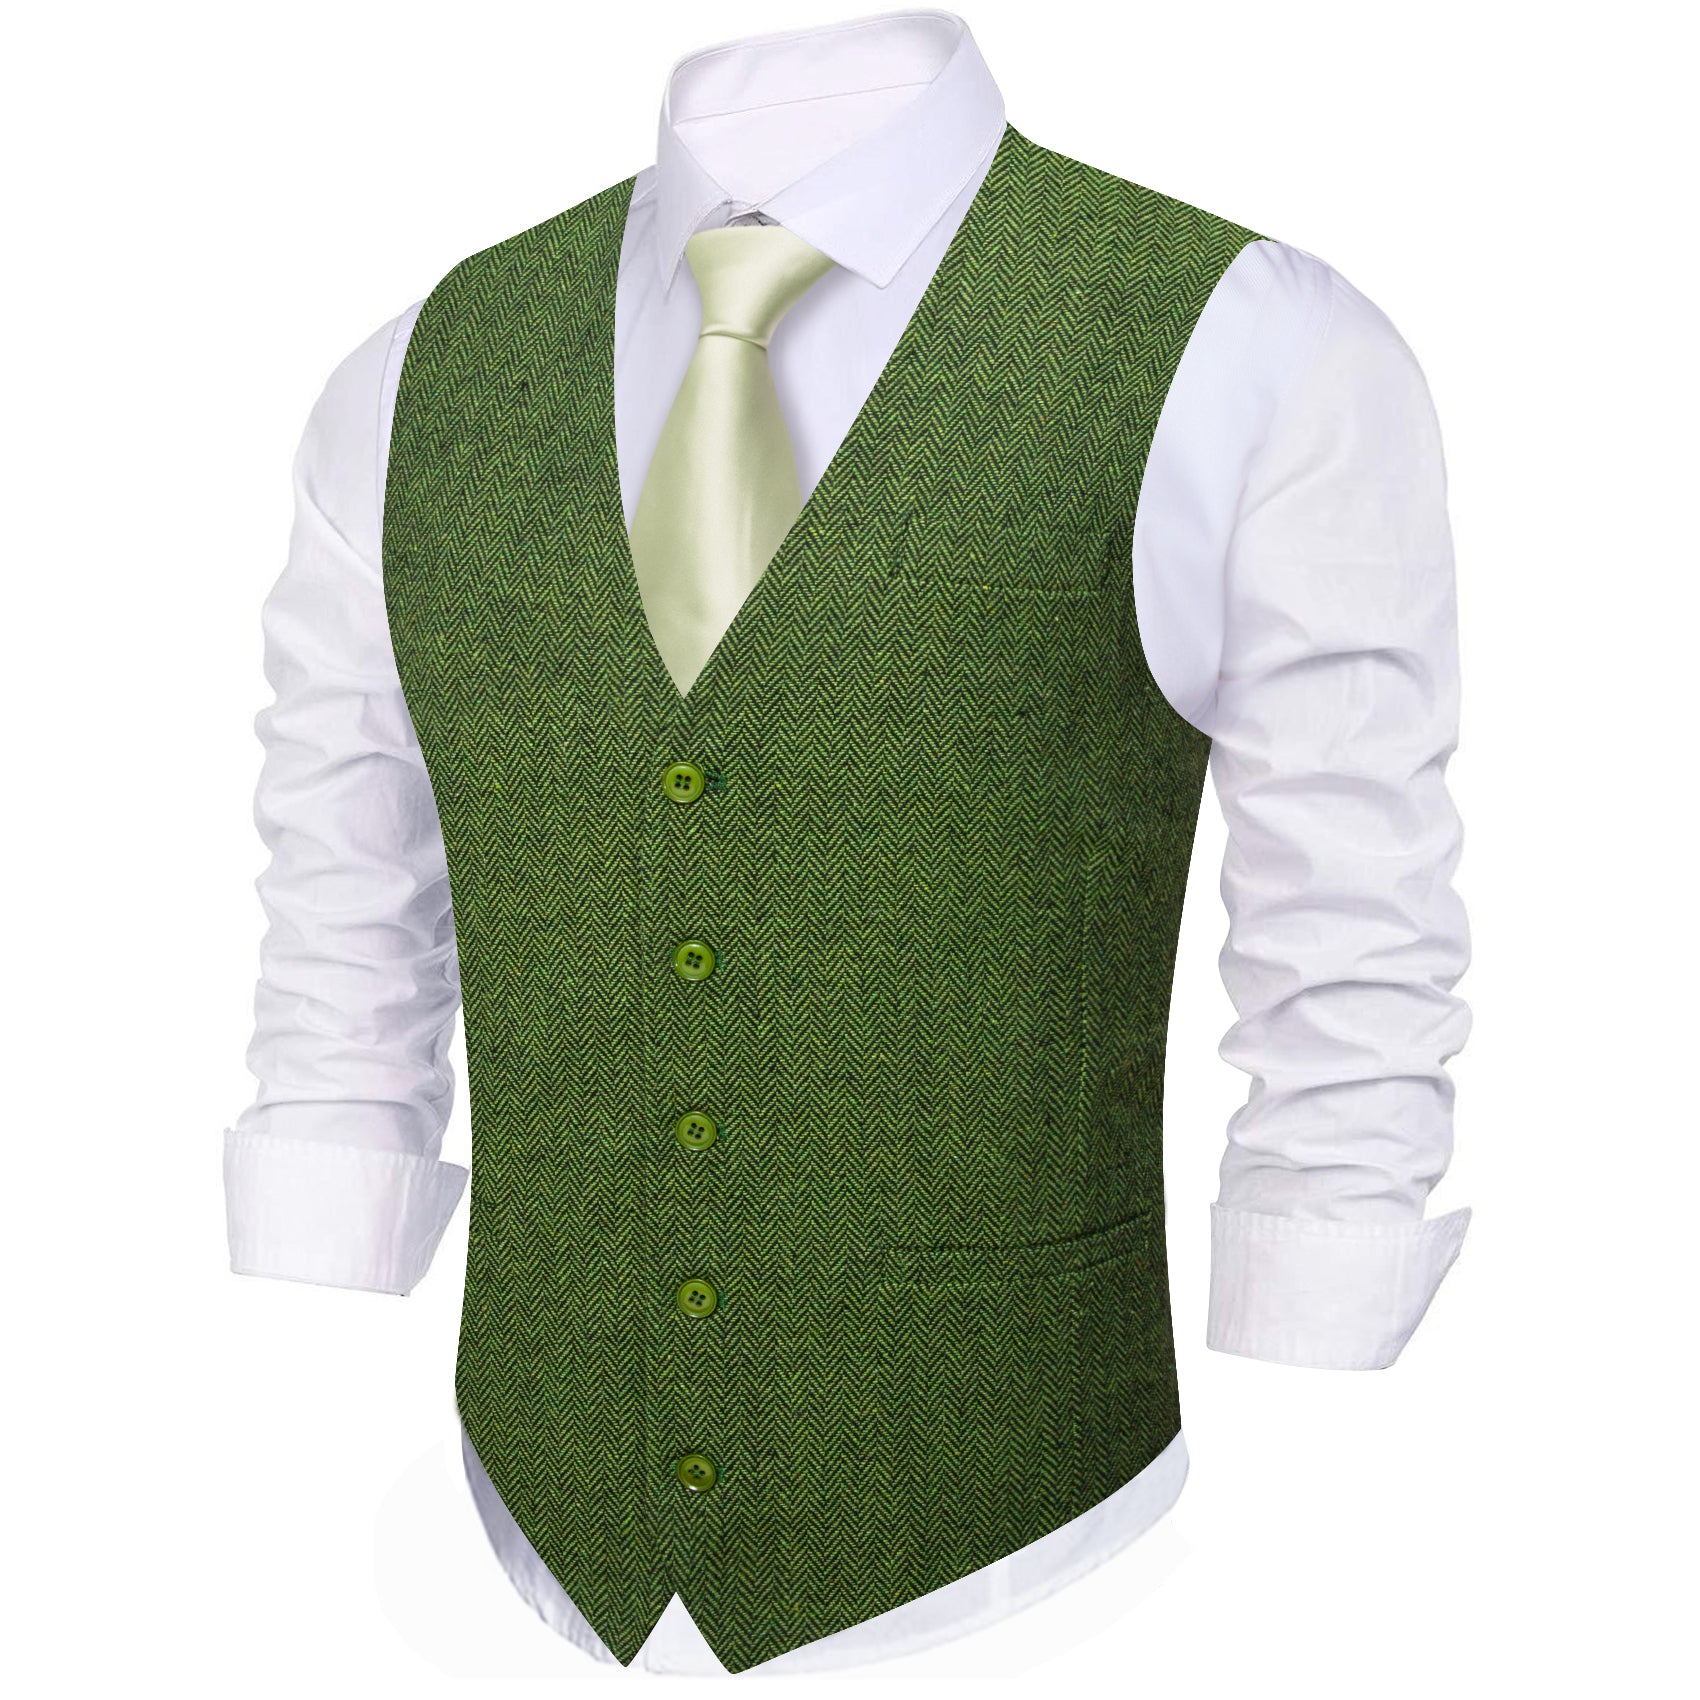 Barry.wang Men‘s Luxury Green Solid Waistcoat Vest